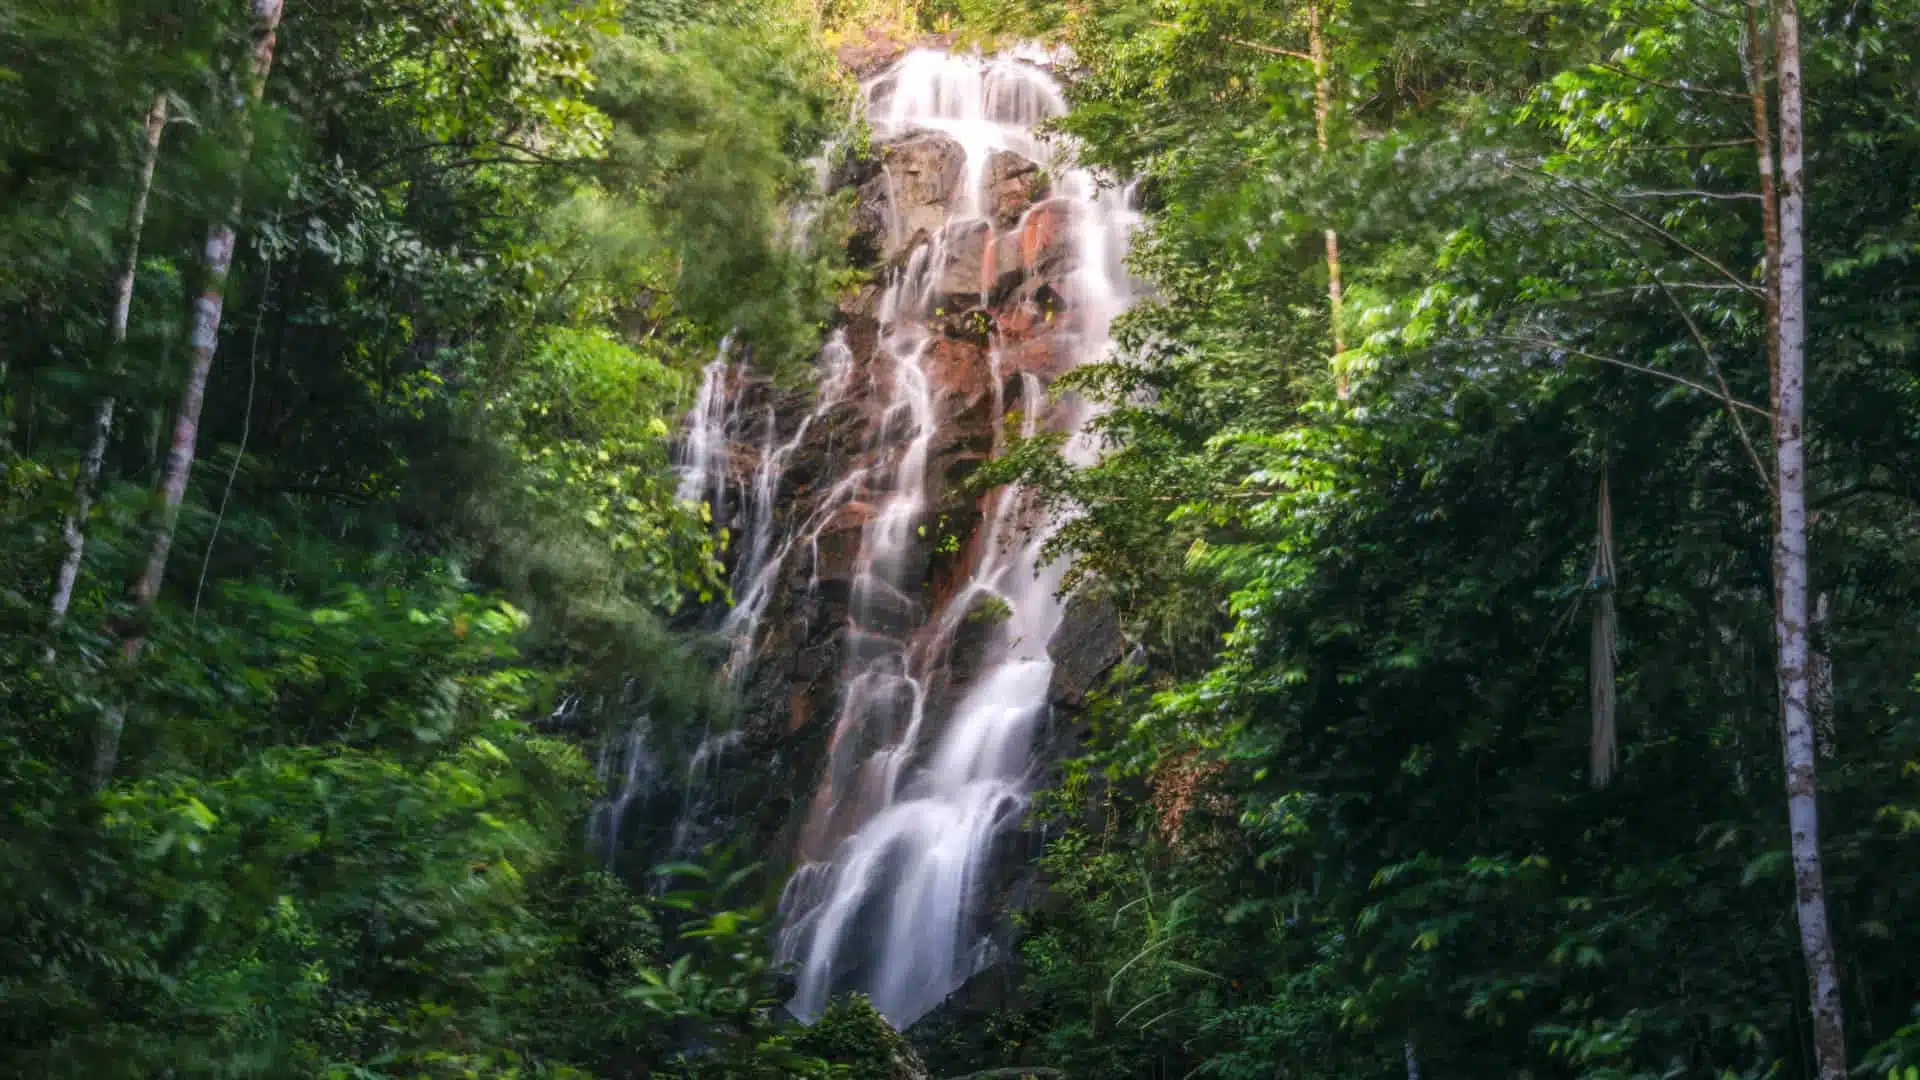 Phaeng Waterfall in Koh Phangan surrounded by lush jungle